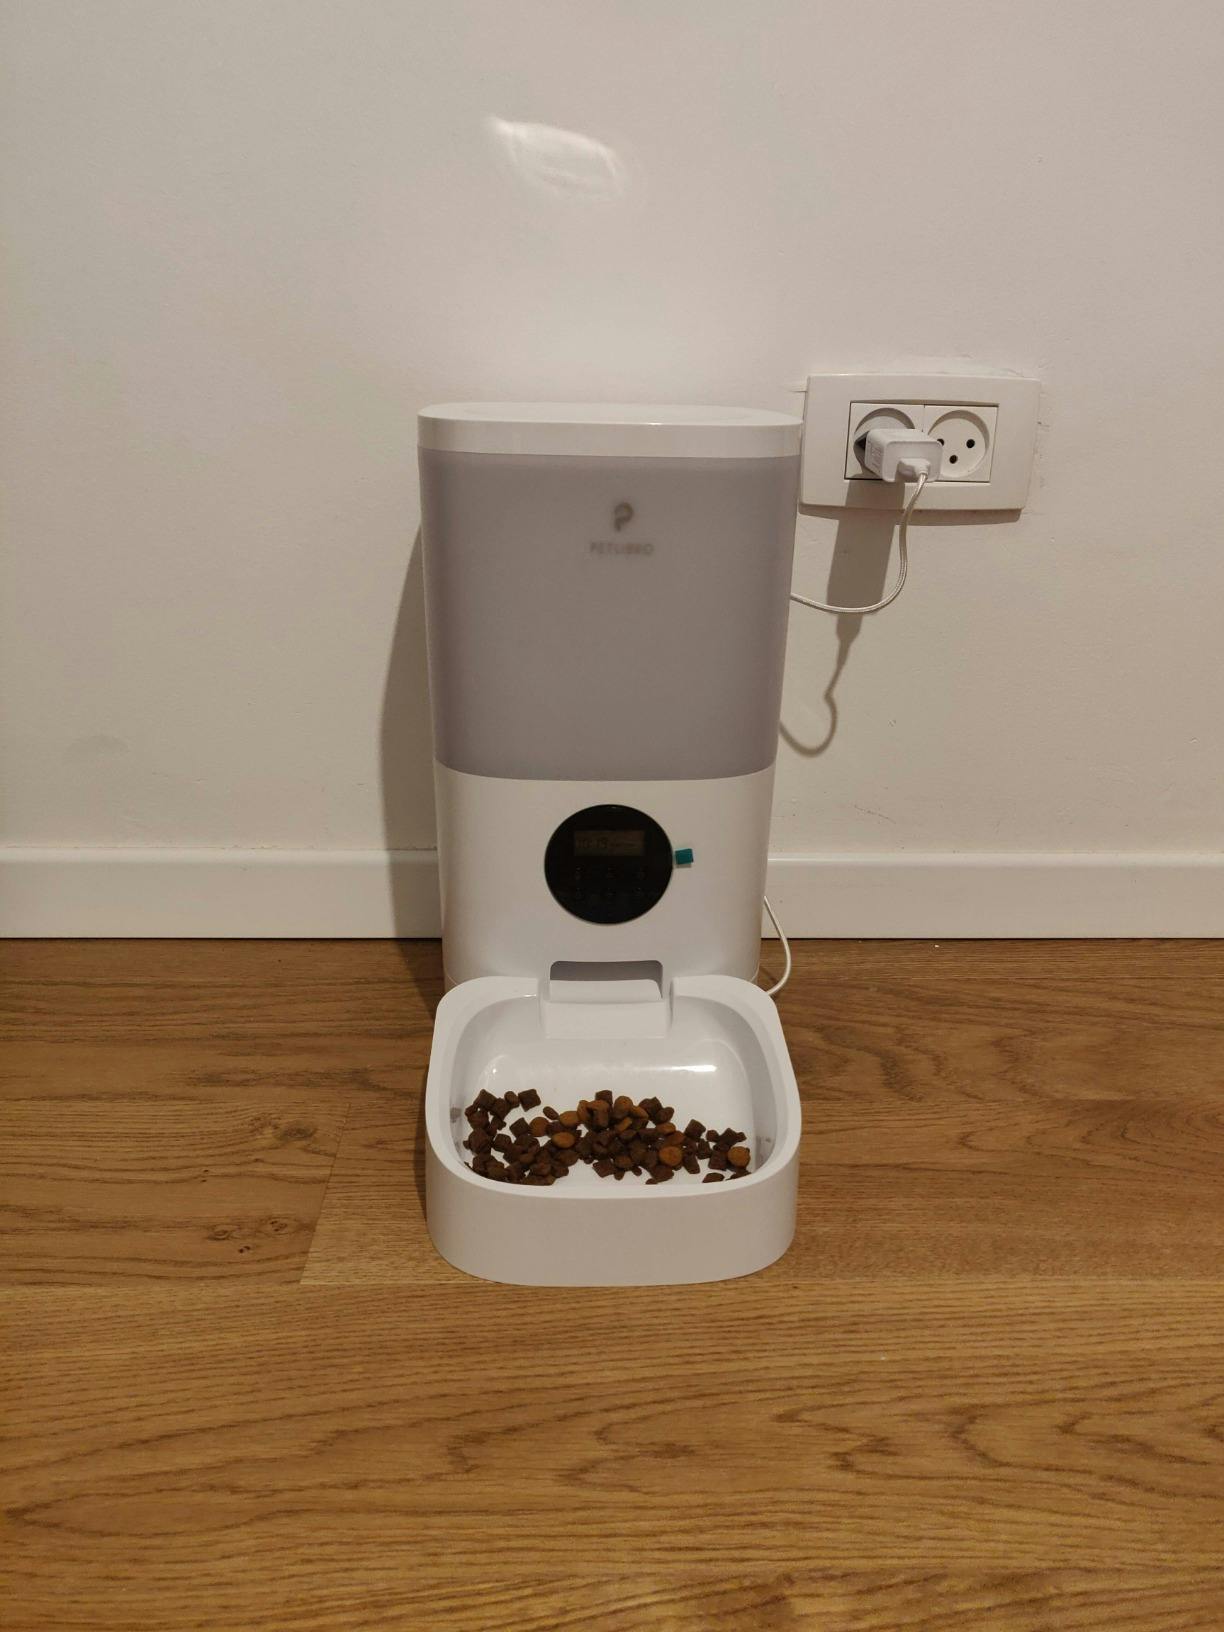 petlibro automatic cat feeder